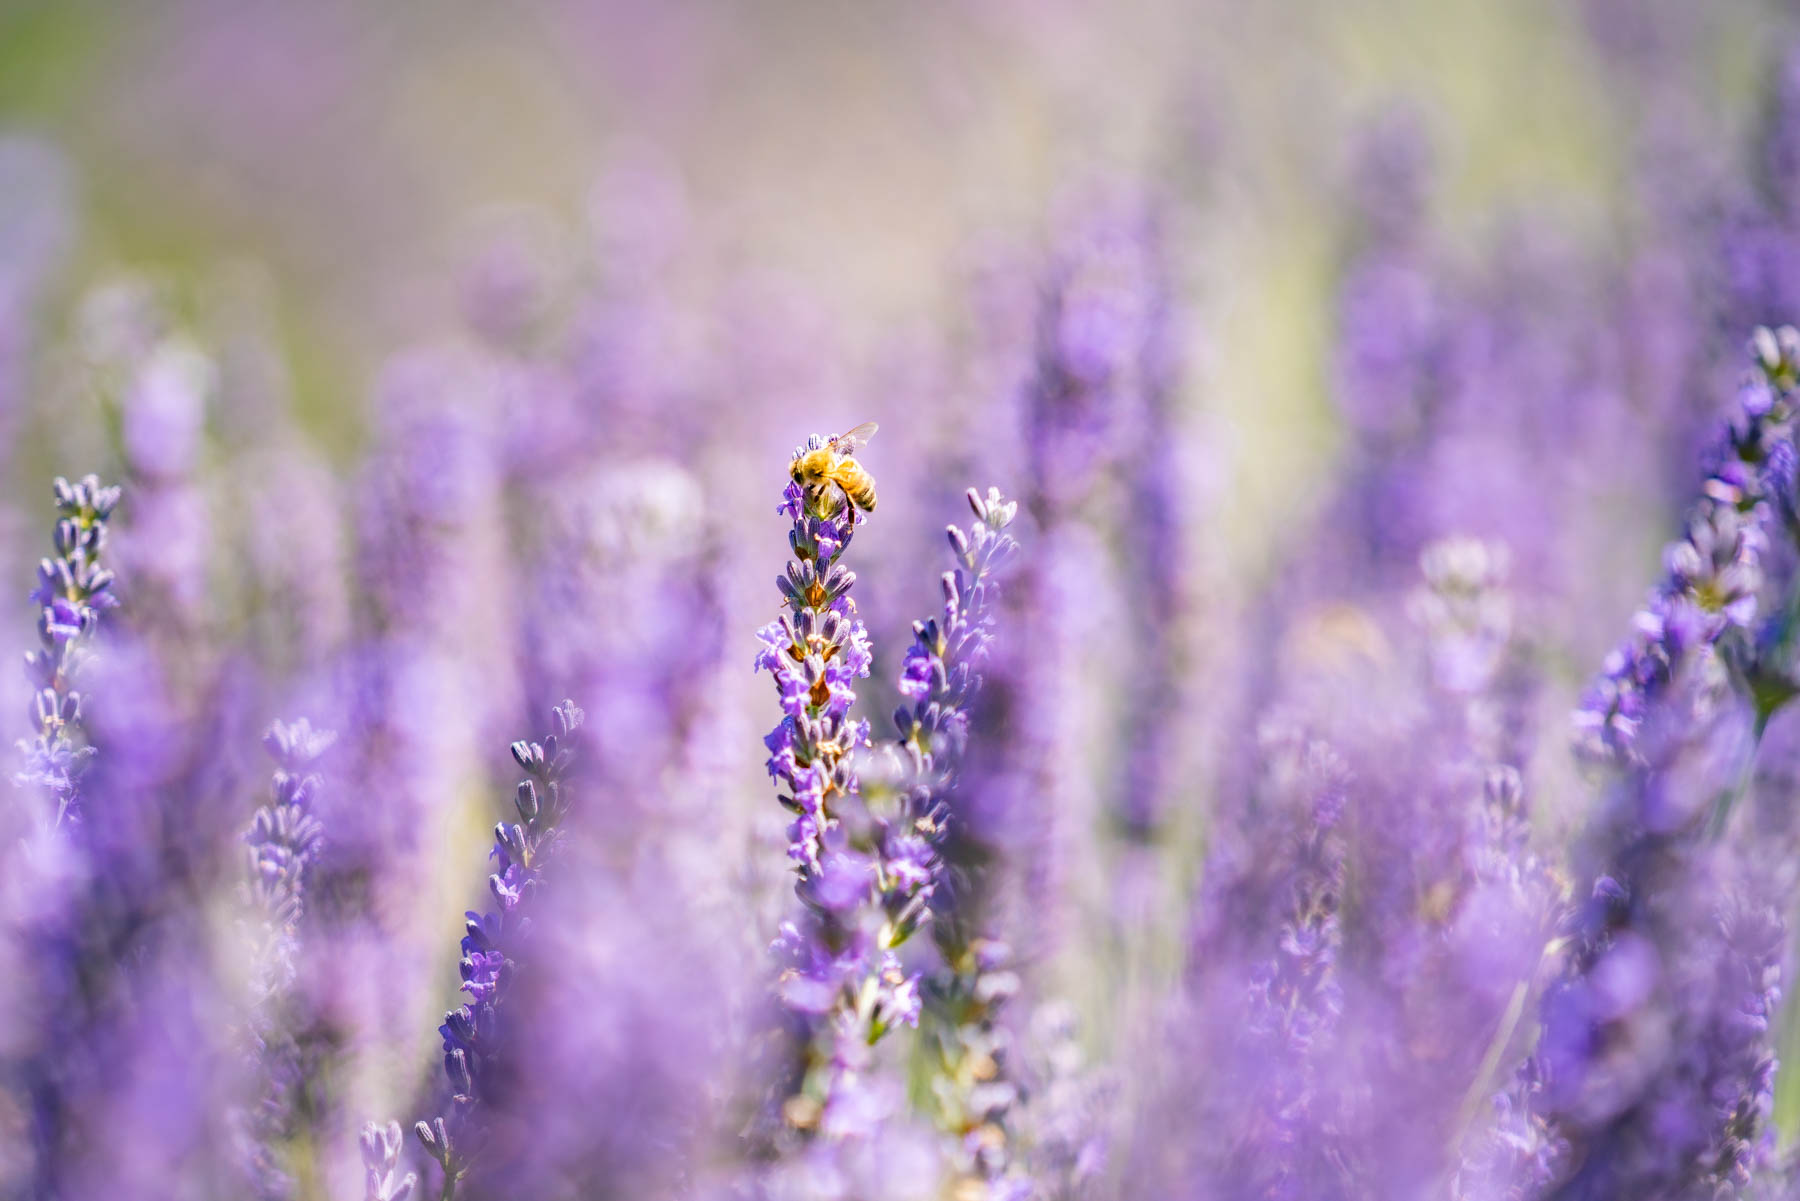 bee in lavender
bee at lavender field